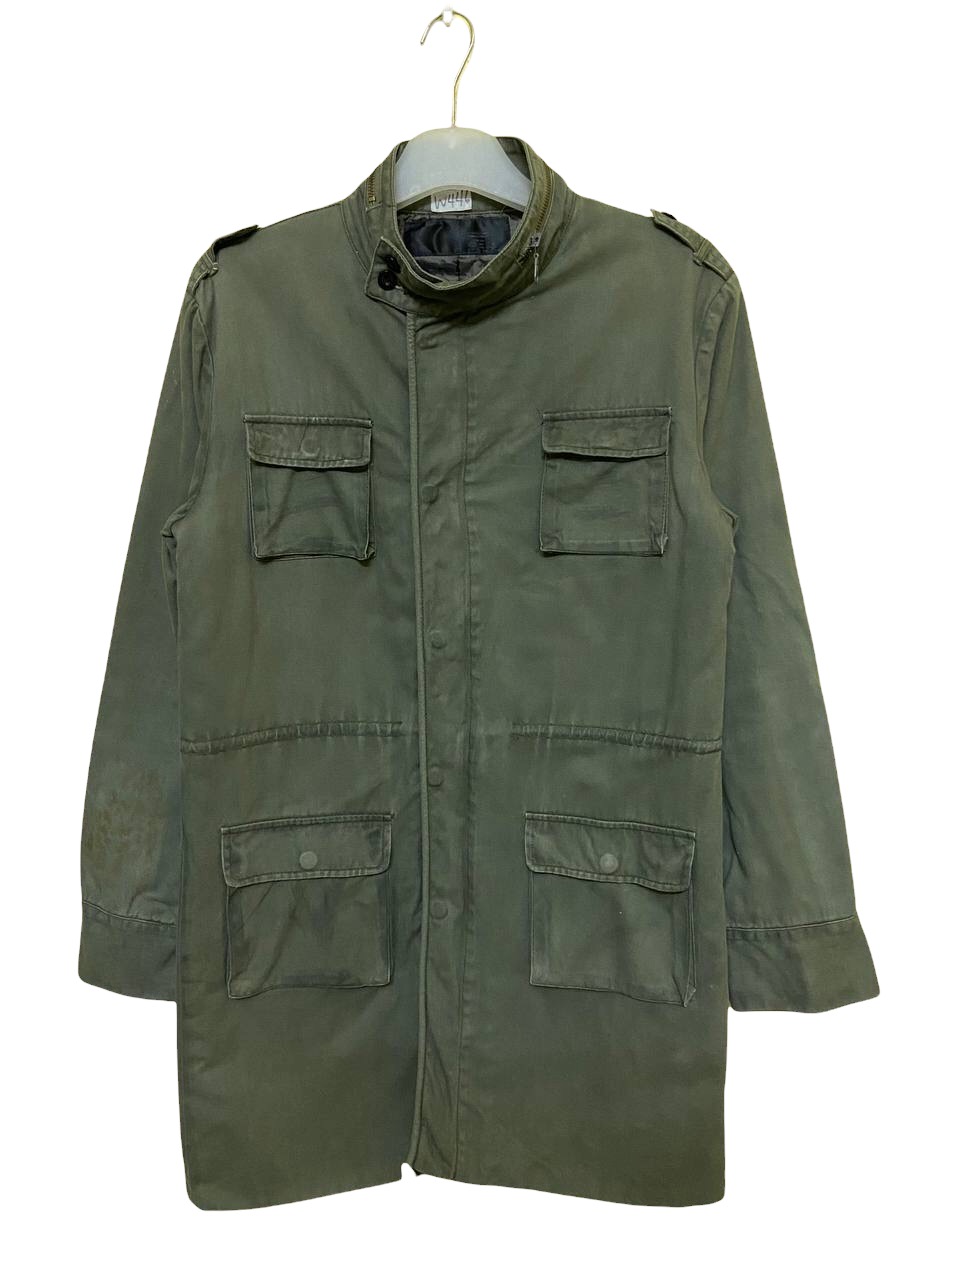 N Hollywood Fishtail Army Jacket - 1